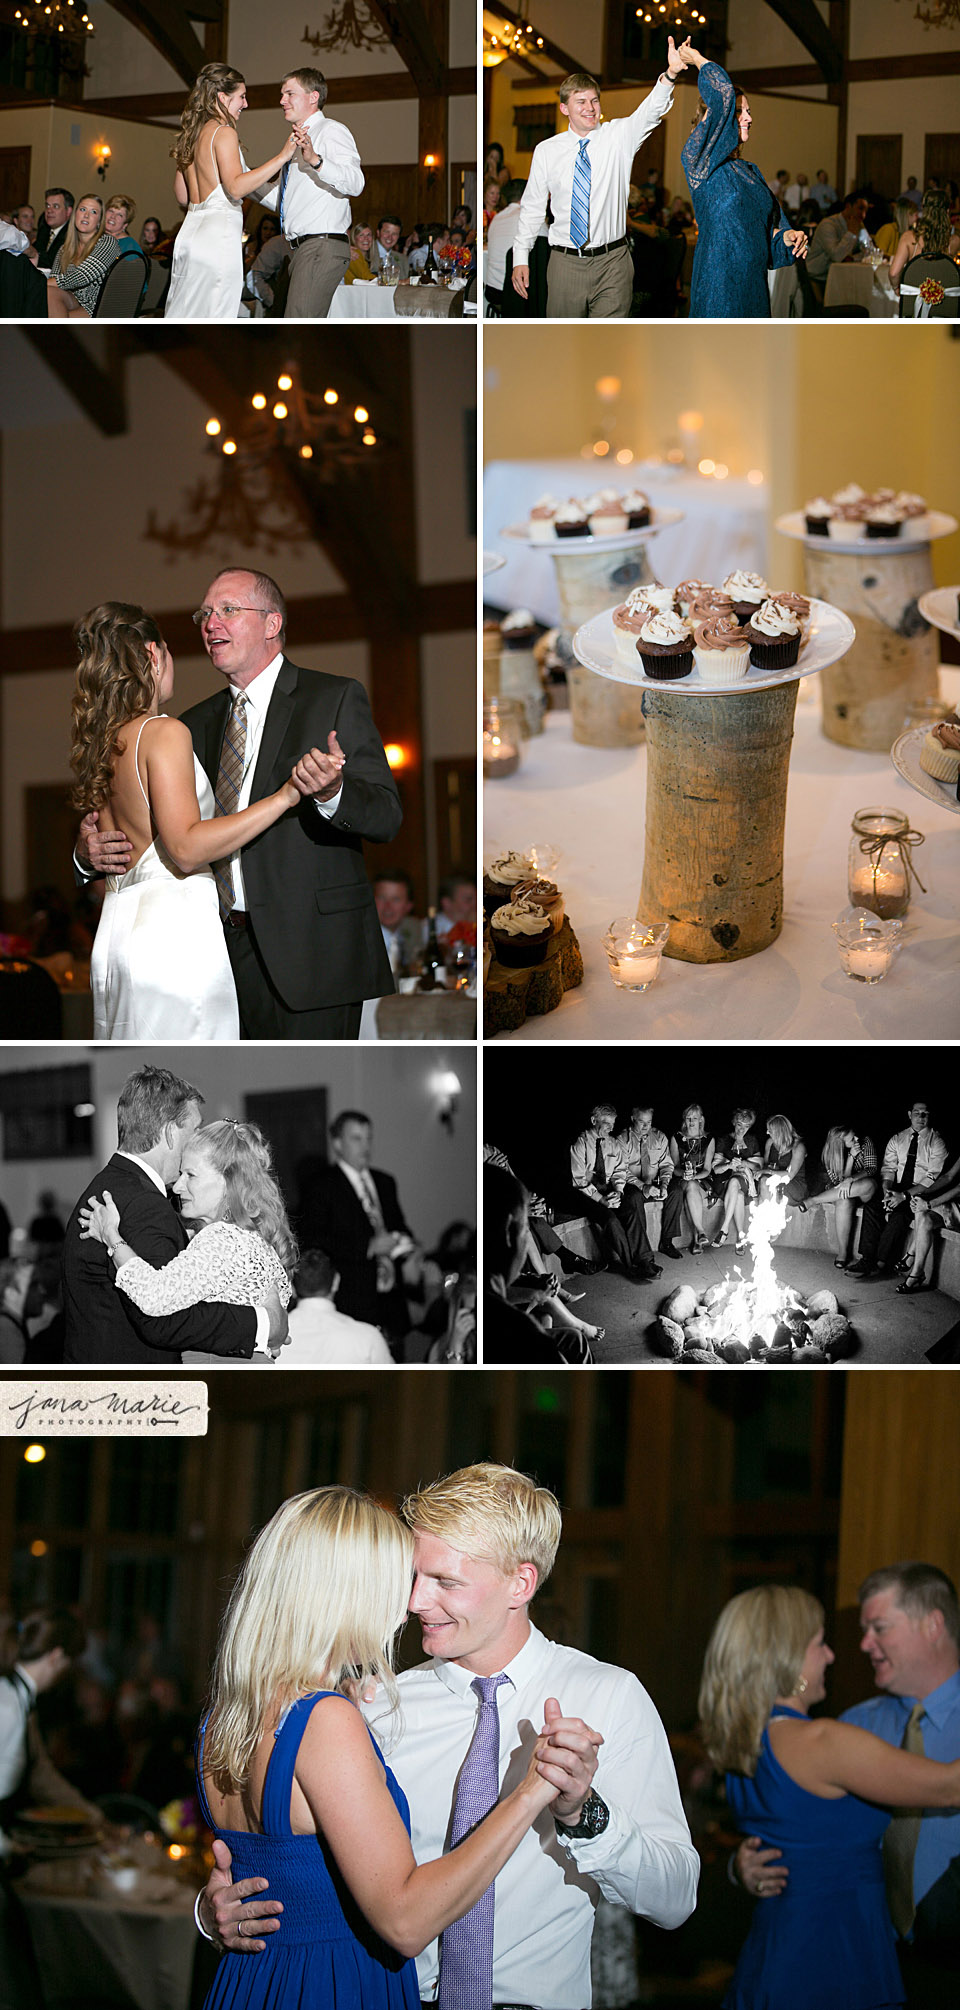 Kansas City wedding photographer, father daughter dance, dancing, bridal party, family, bon fire, Colorado weddings in the fall